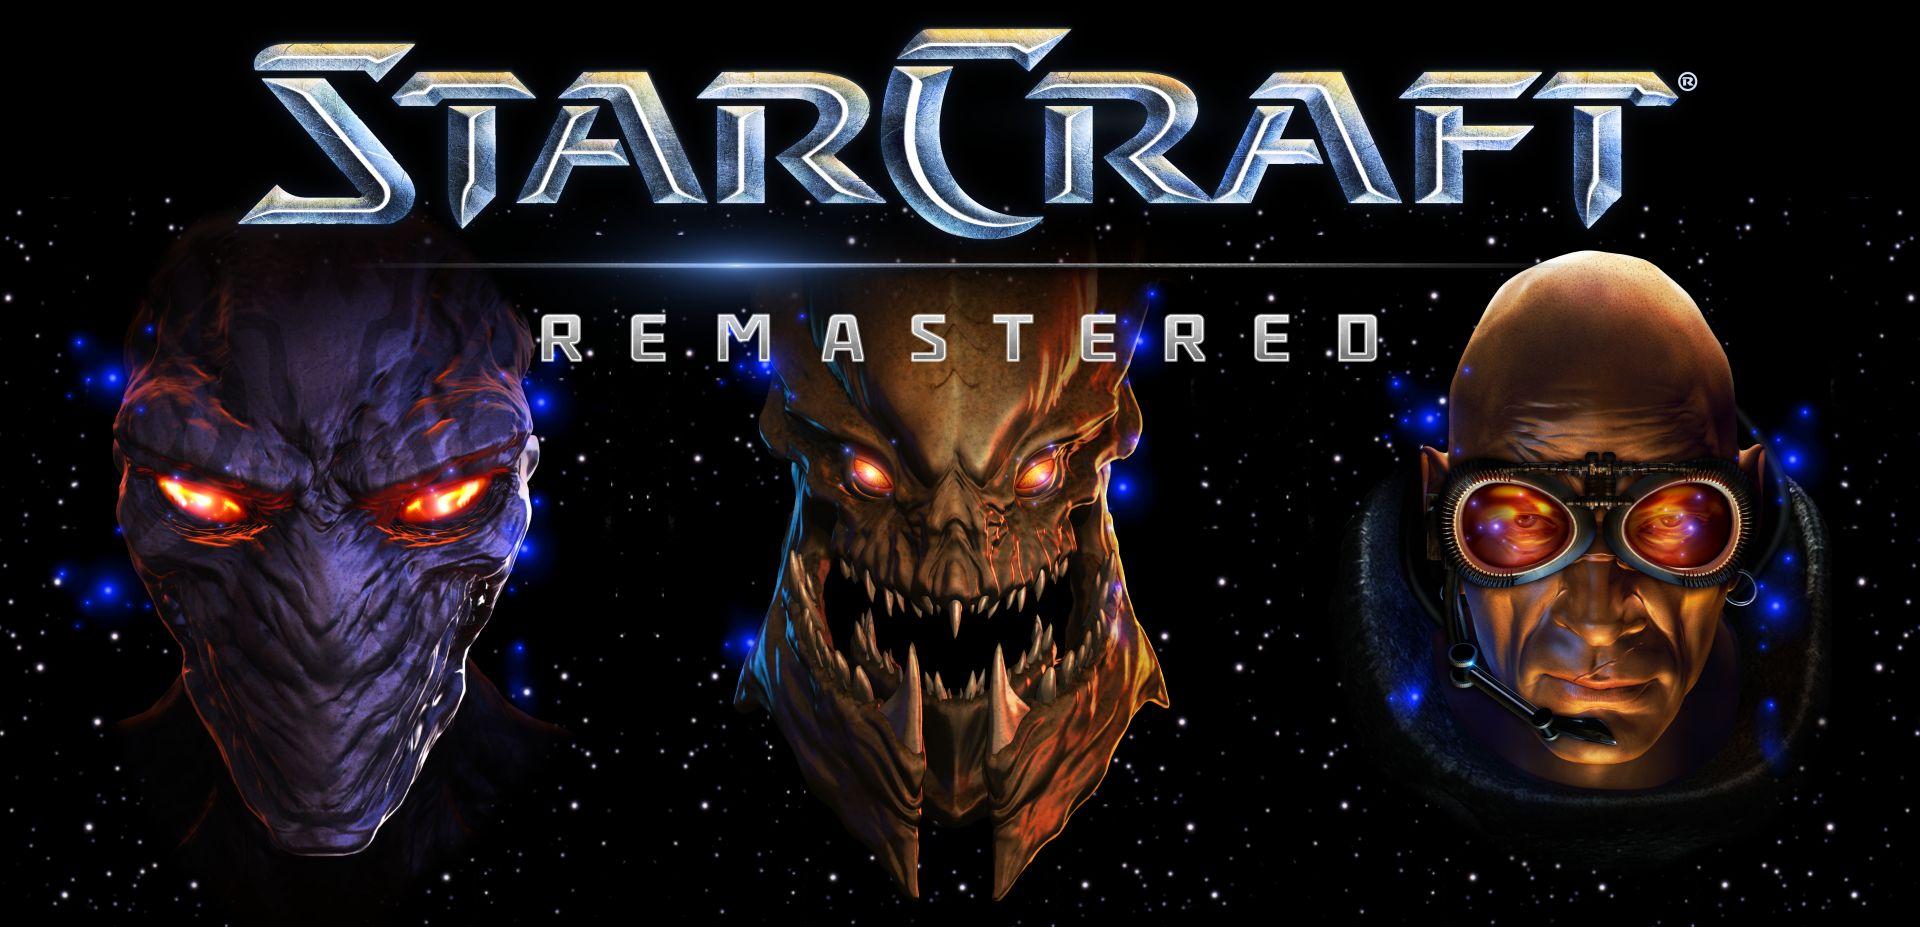 Novo visual, glitches antigos: StarCraft Remastered terá exatamente a mesma jogabilidade